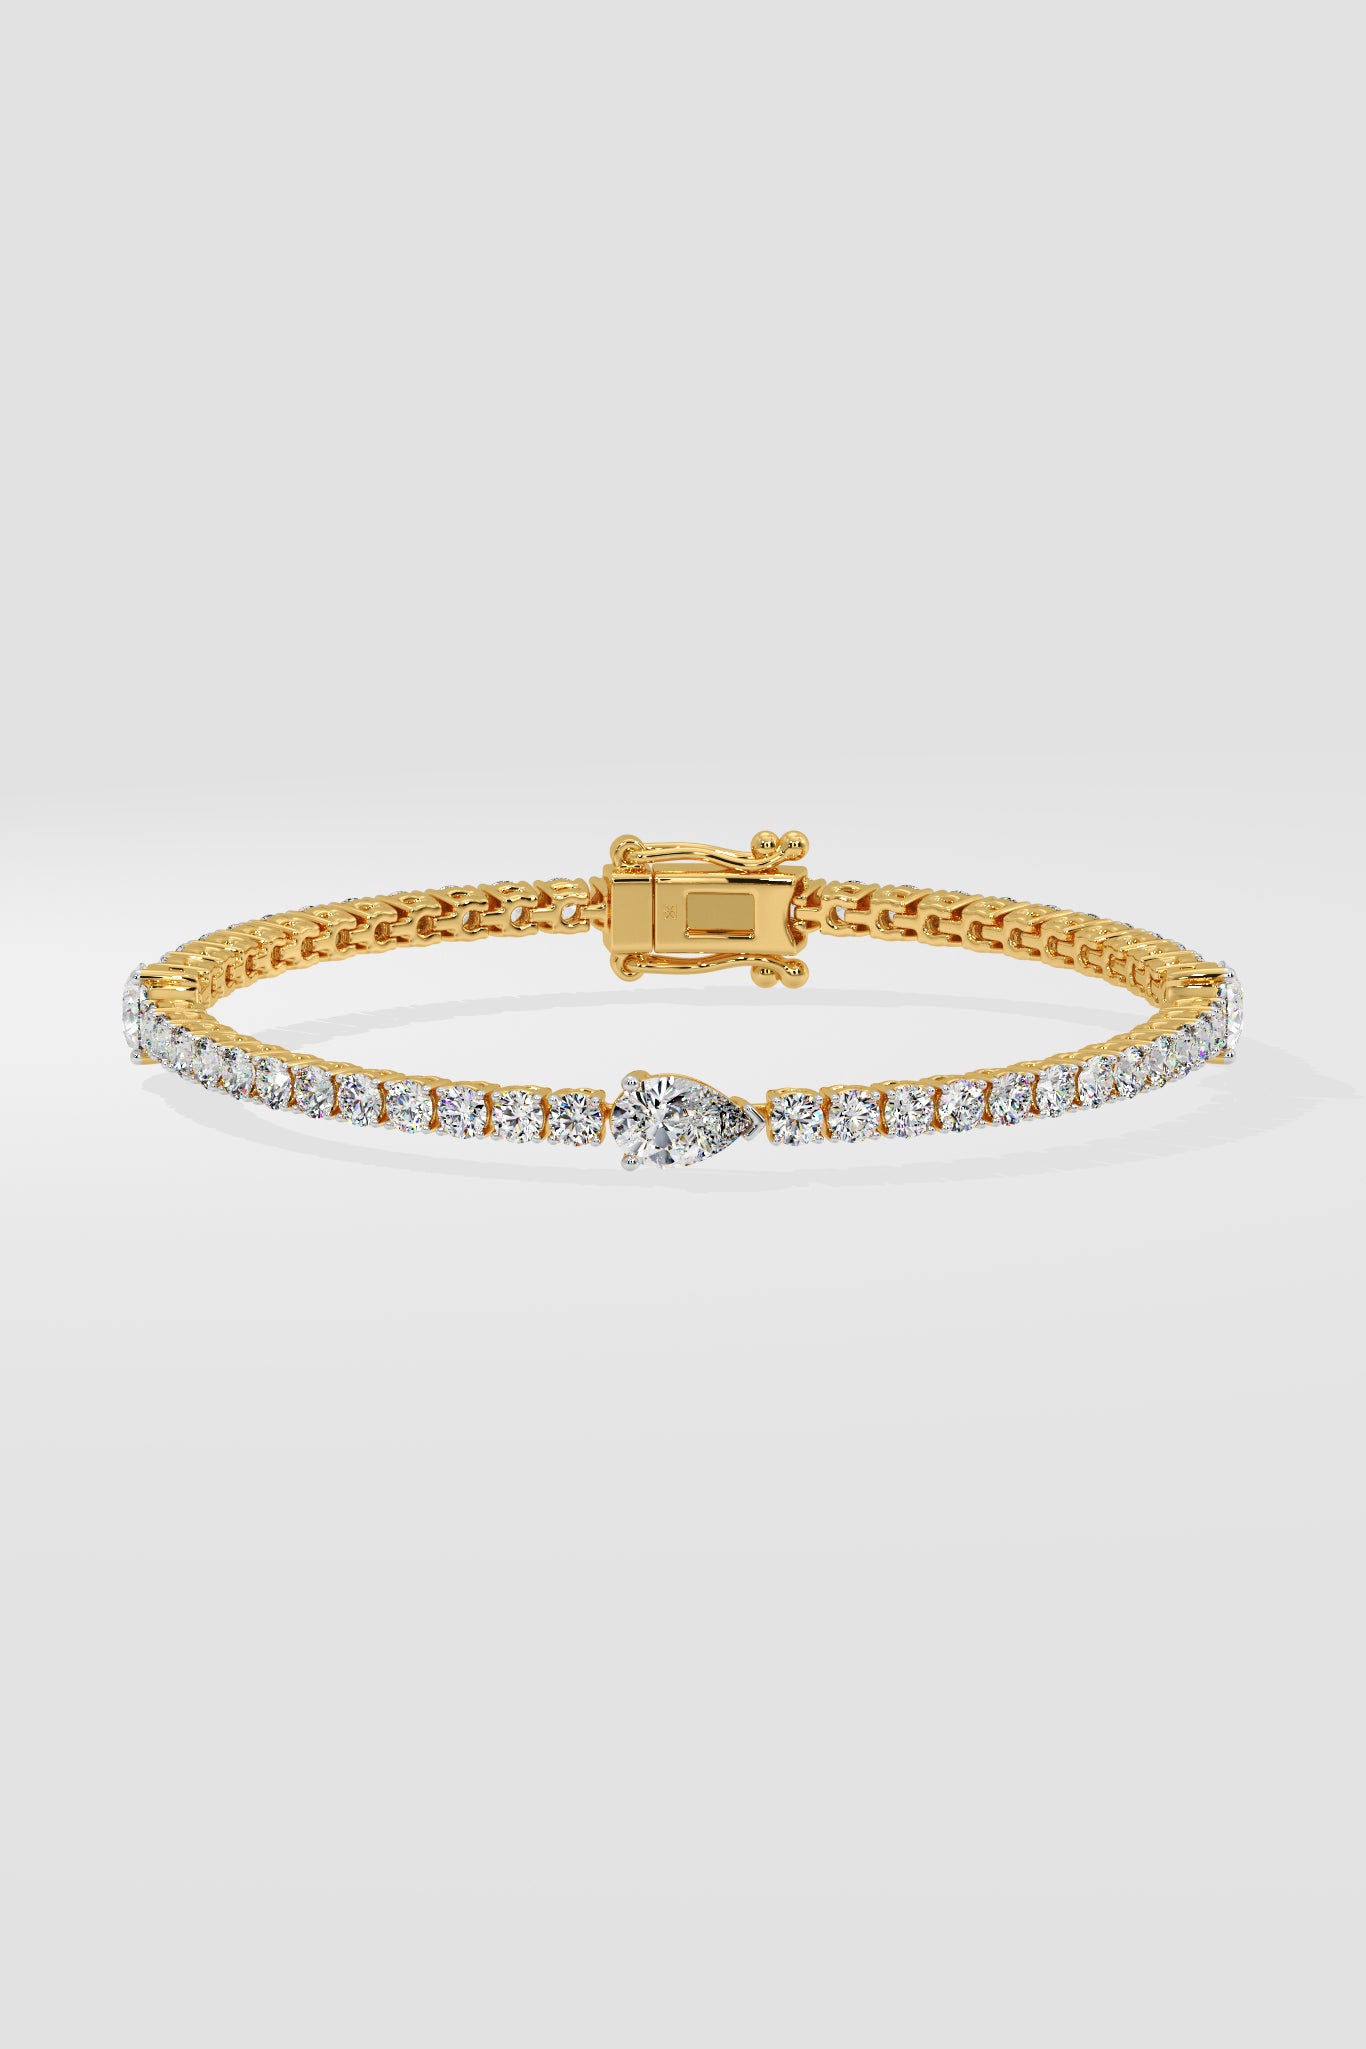 Aster Diamond Bracelet